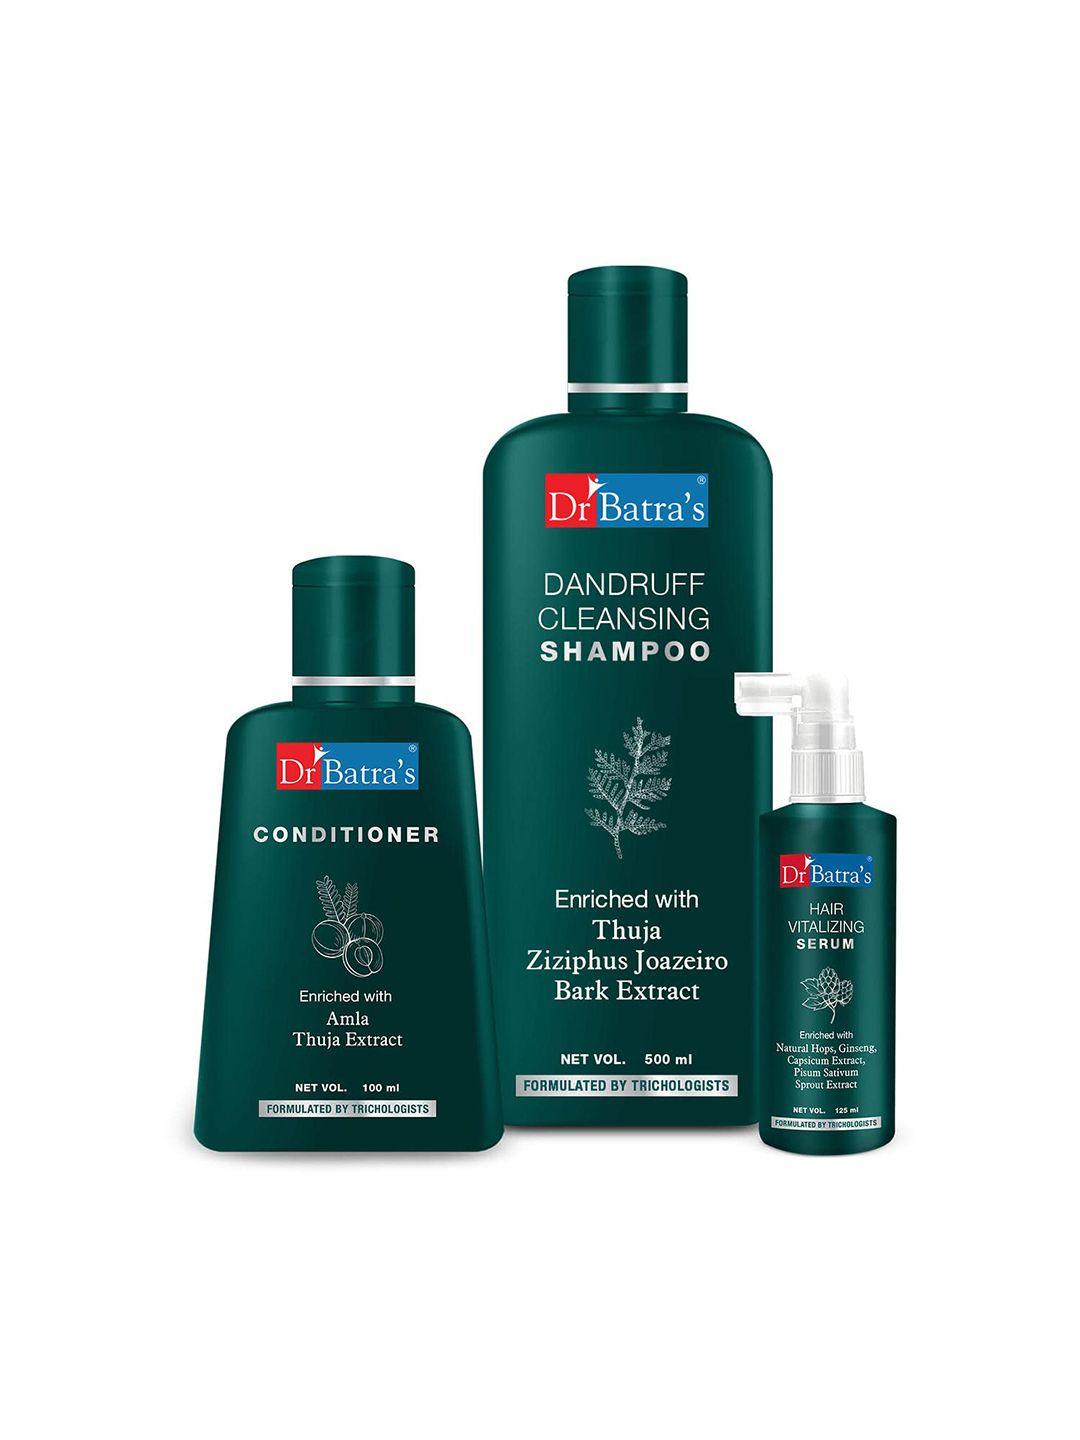 dr. batras hair vitalizing serum 125ml + conditioner 100ml + anti dandruff shampoo 500ml